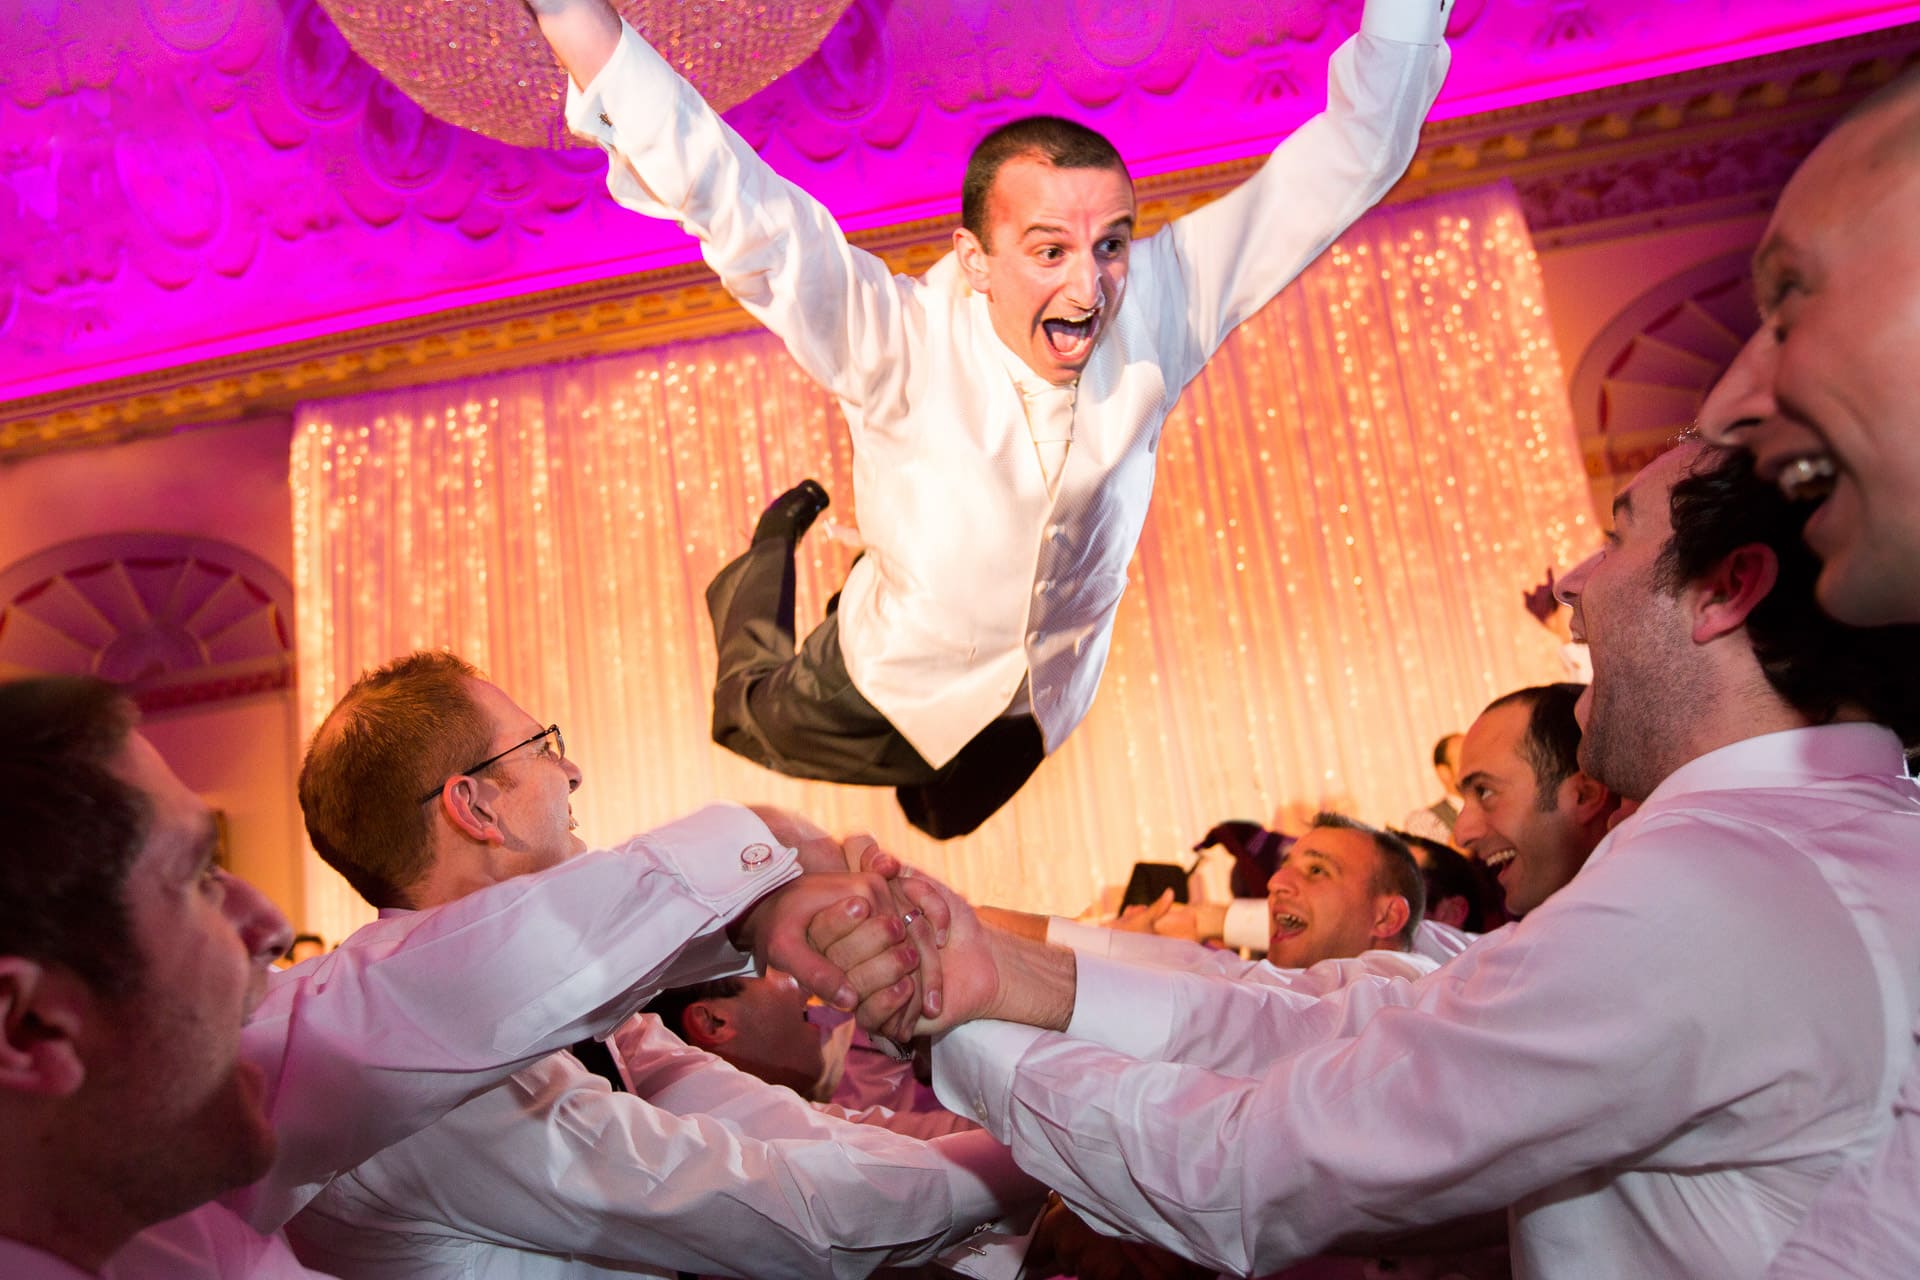 jewish groom jumping during Israeli dancing